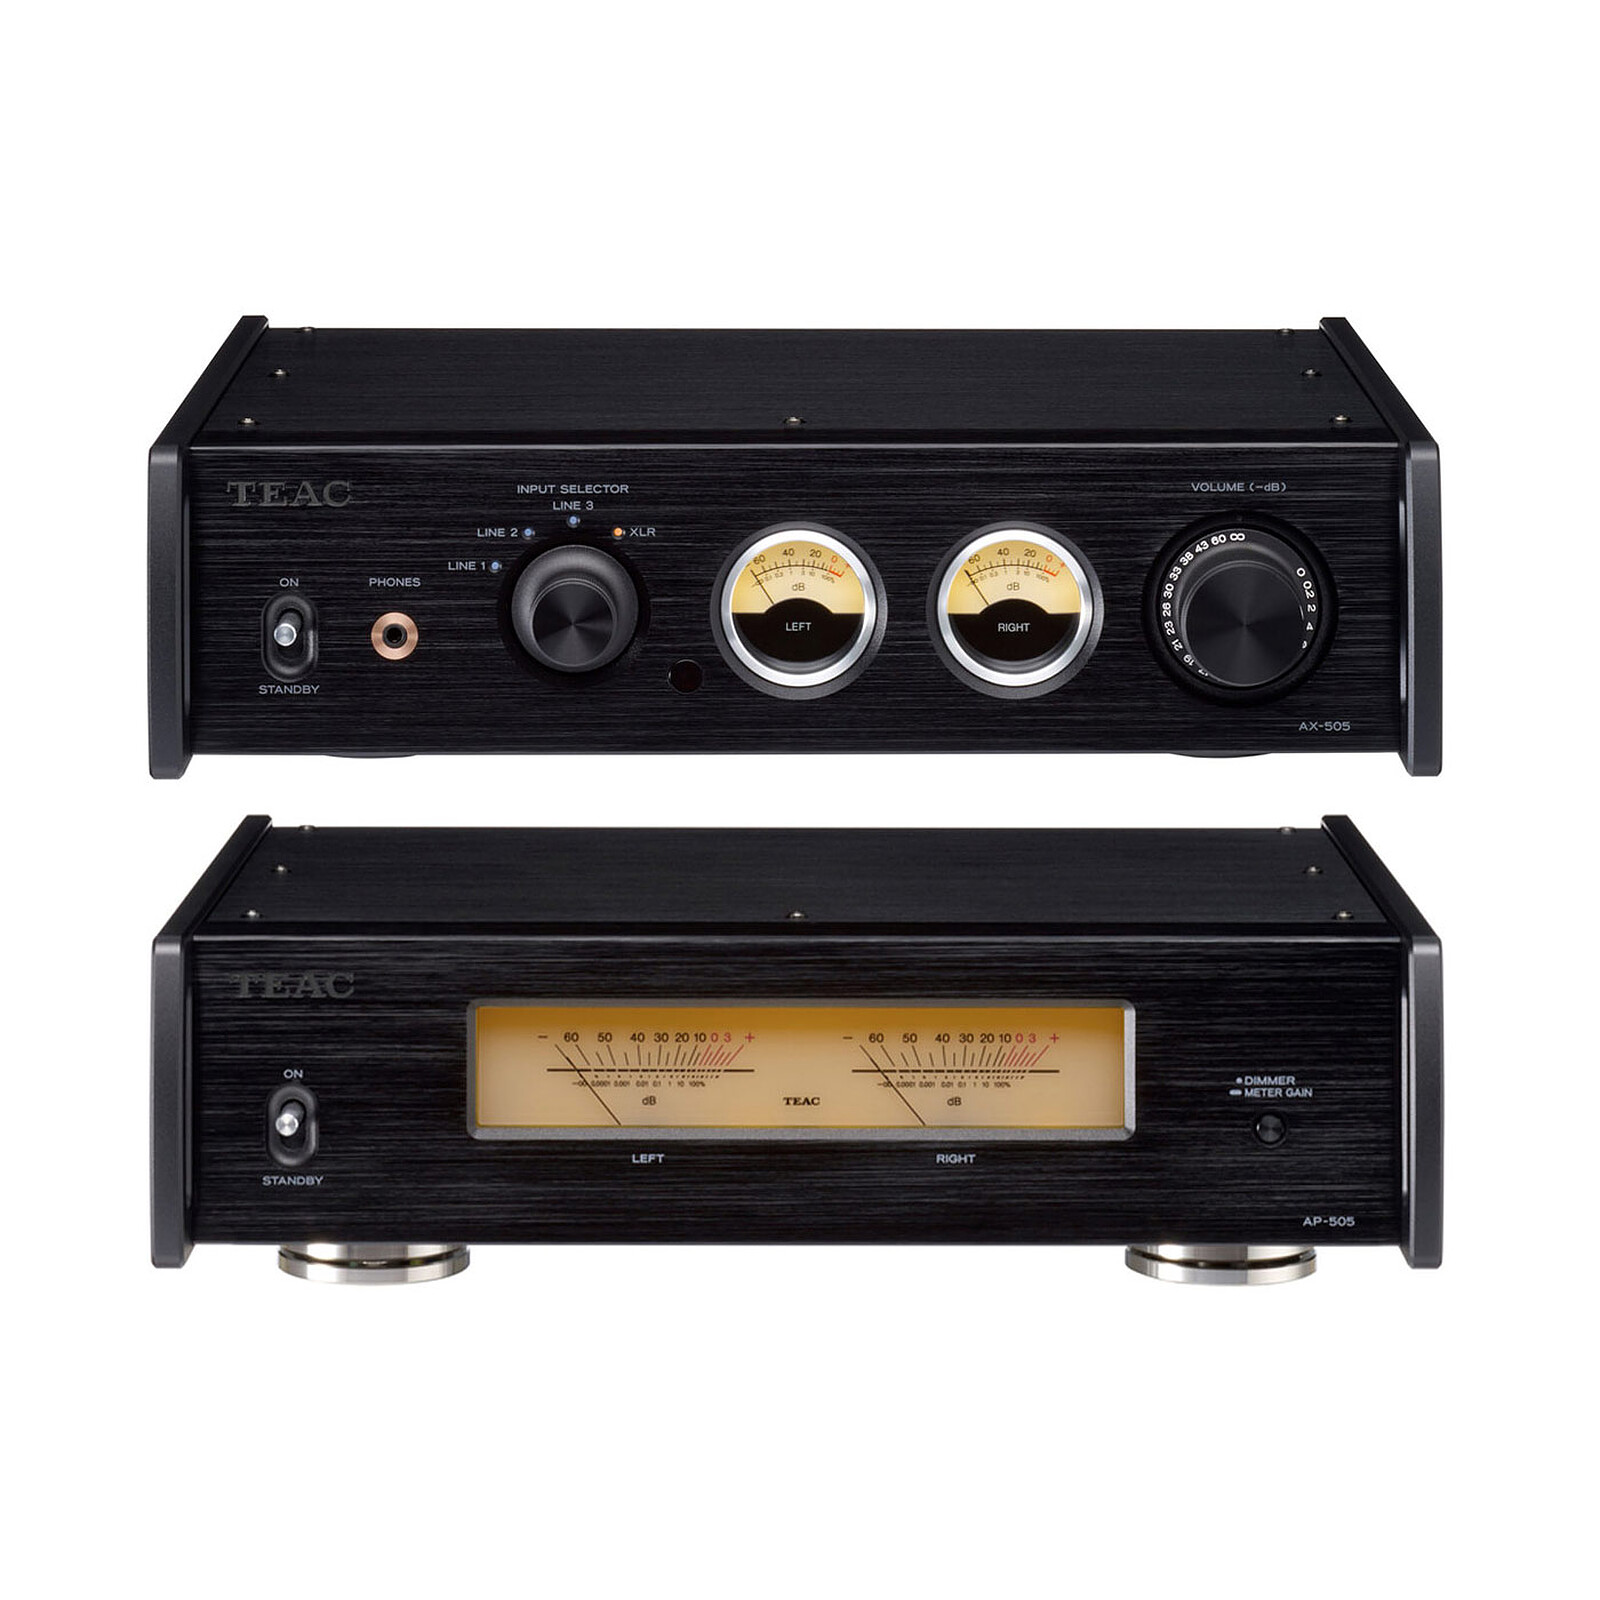 Teac AX-505 Black + | AP-505 Black system Holy Home LDLC warranty - audio Moley 3-year 